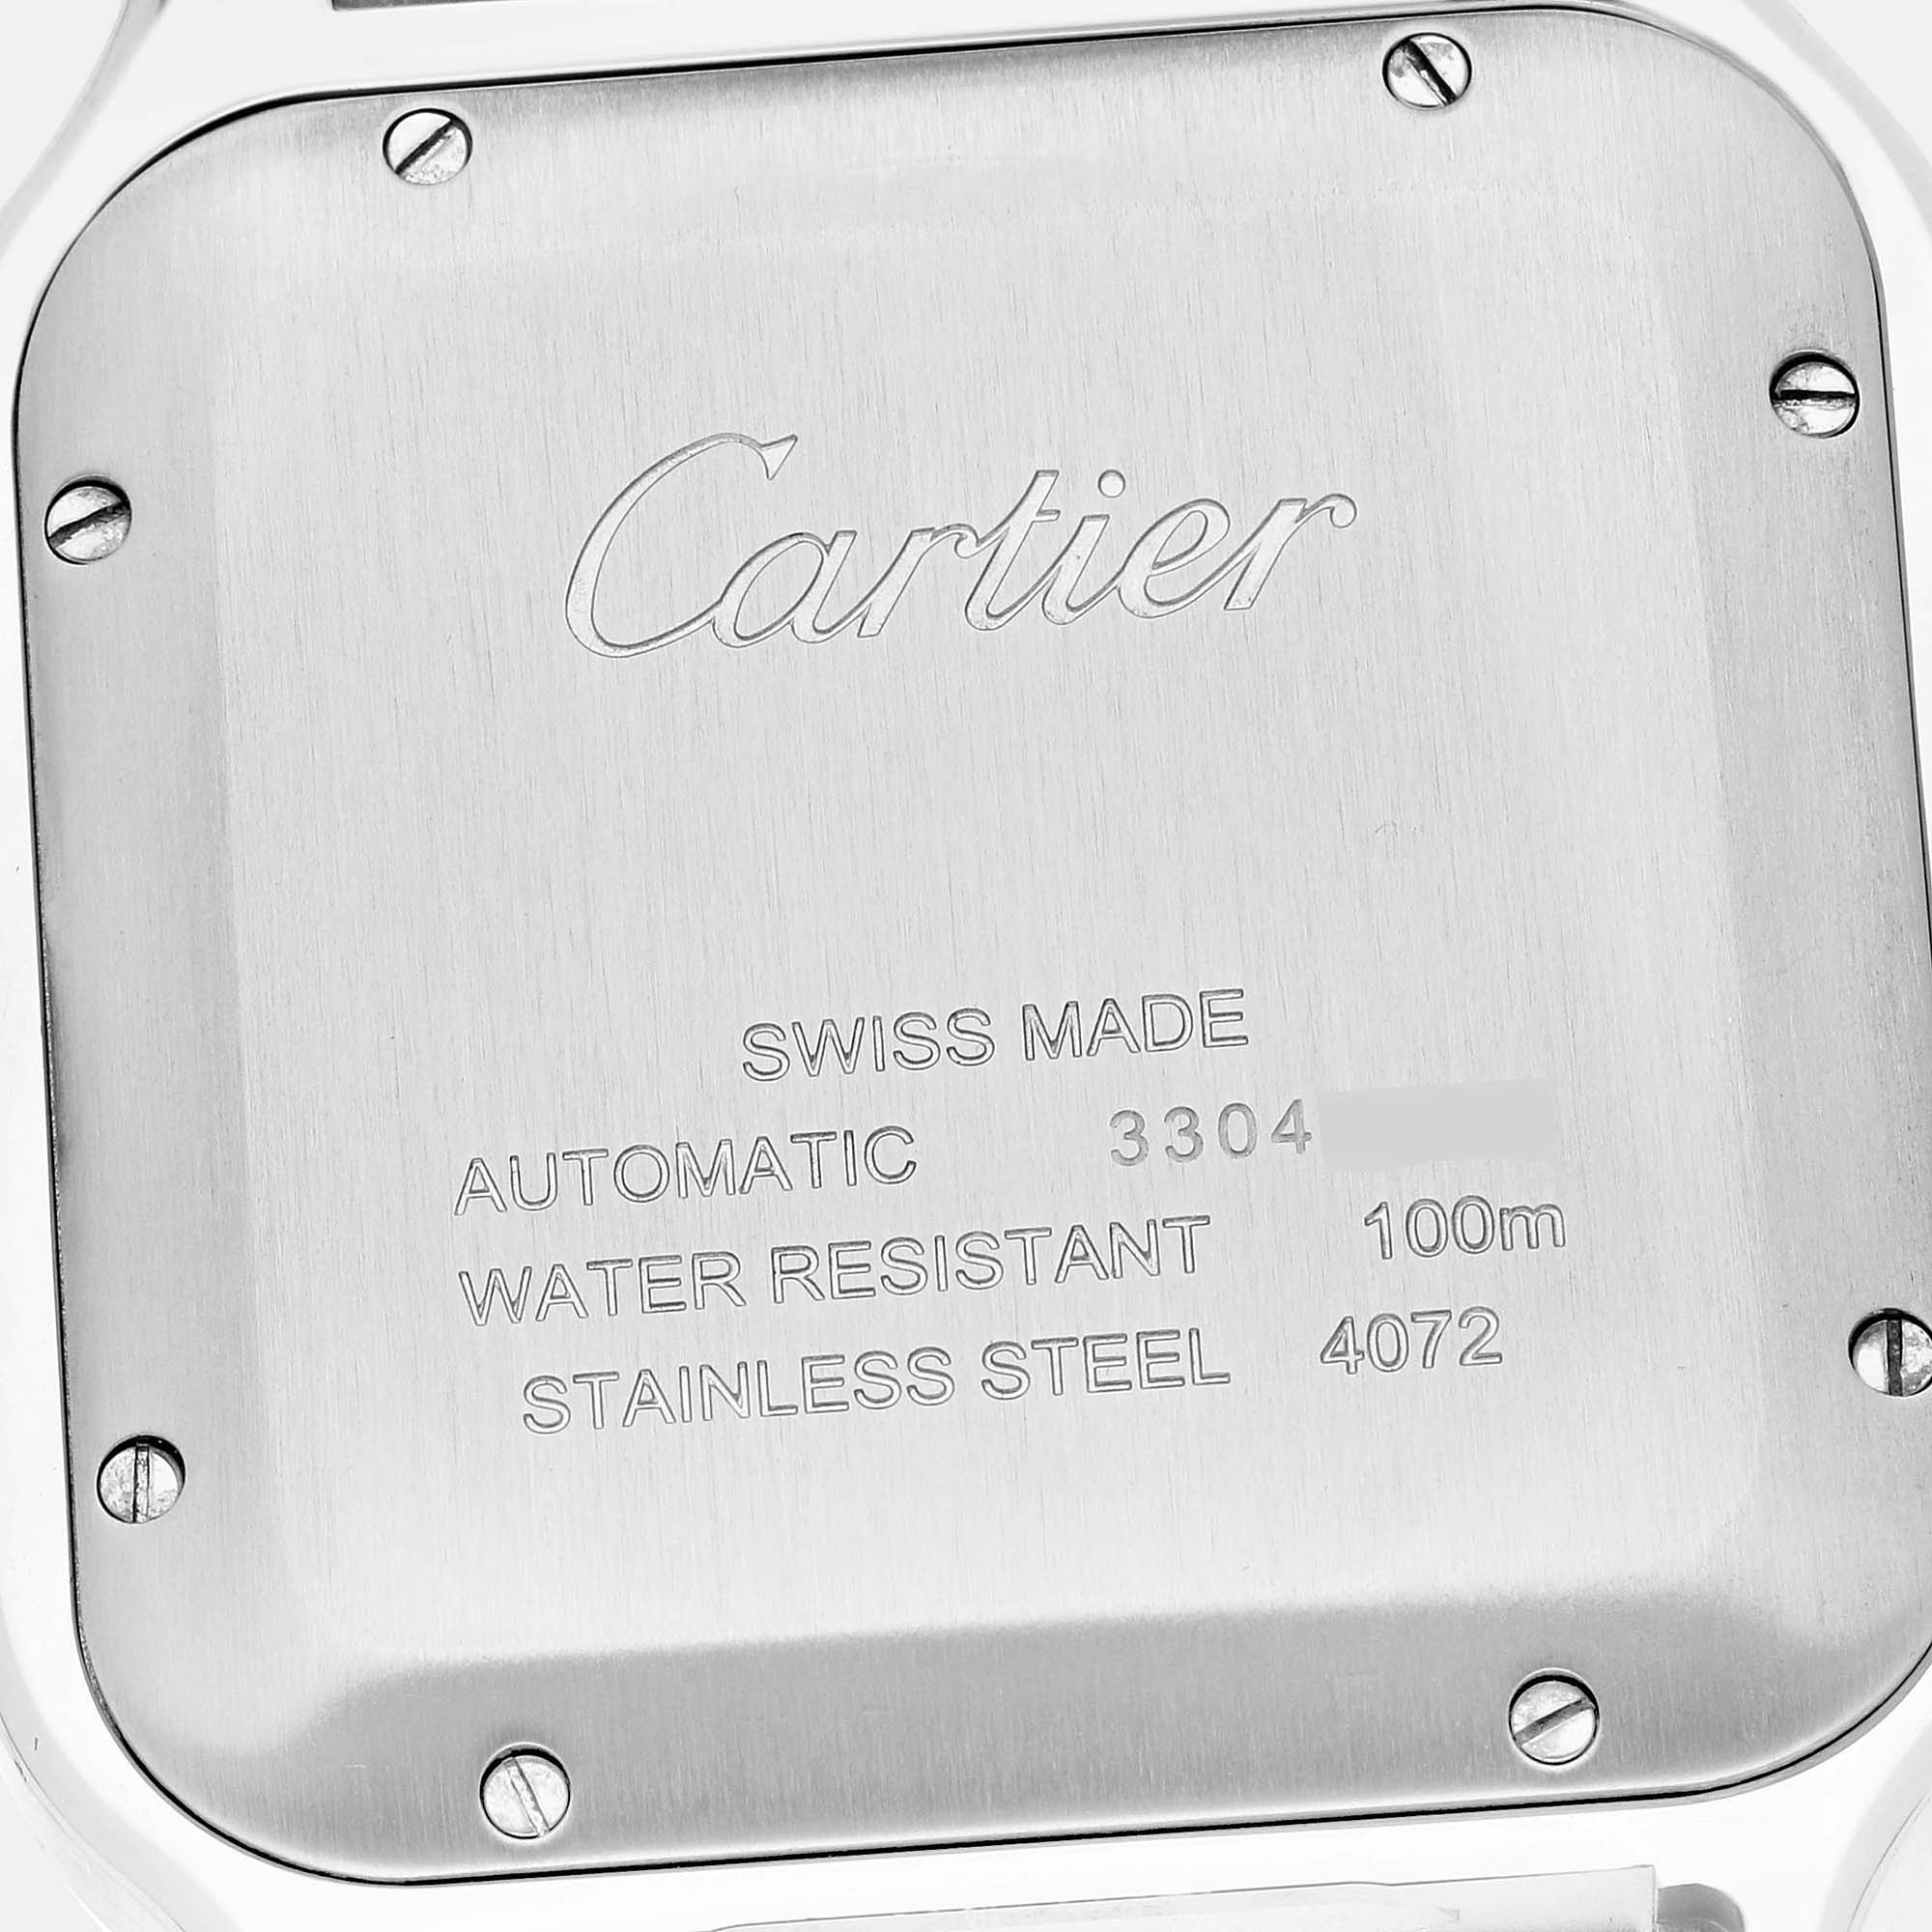 Cartier Santos Large Silver Dial Steel Mens Watch WSSA0018 39.8 Mm X 47.5 Mm